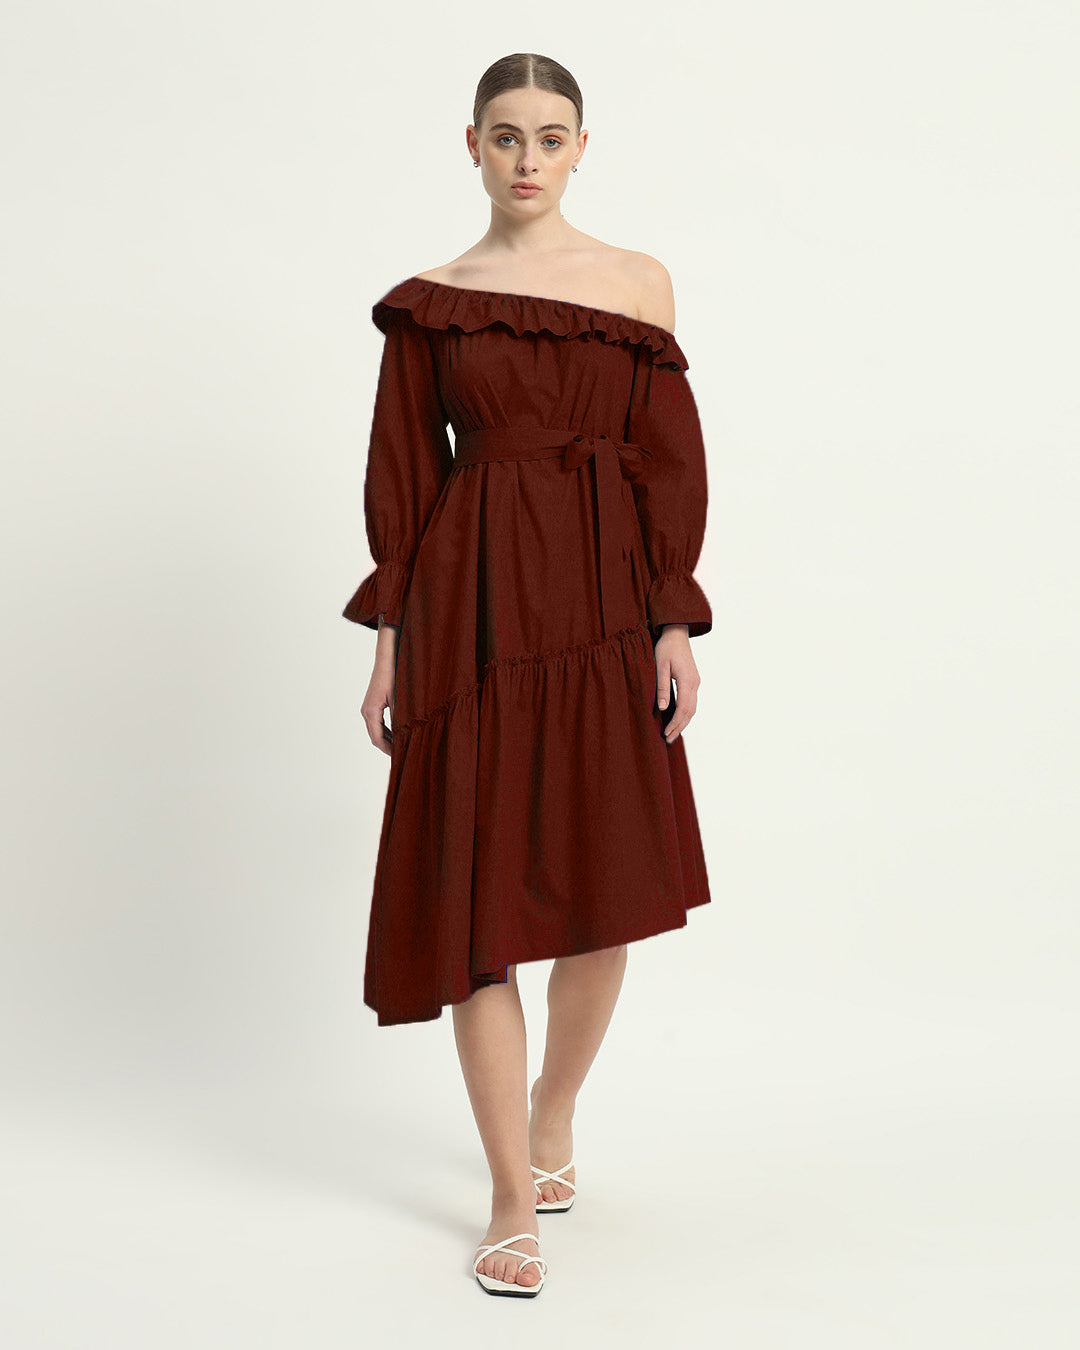 The Stellata Rouge Cotton Dress